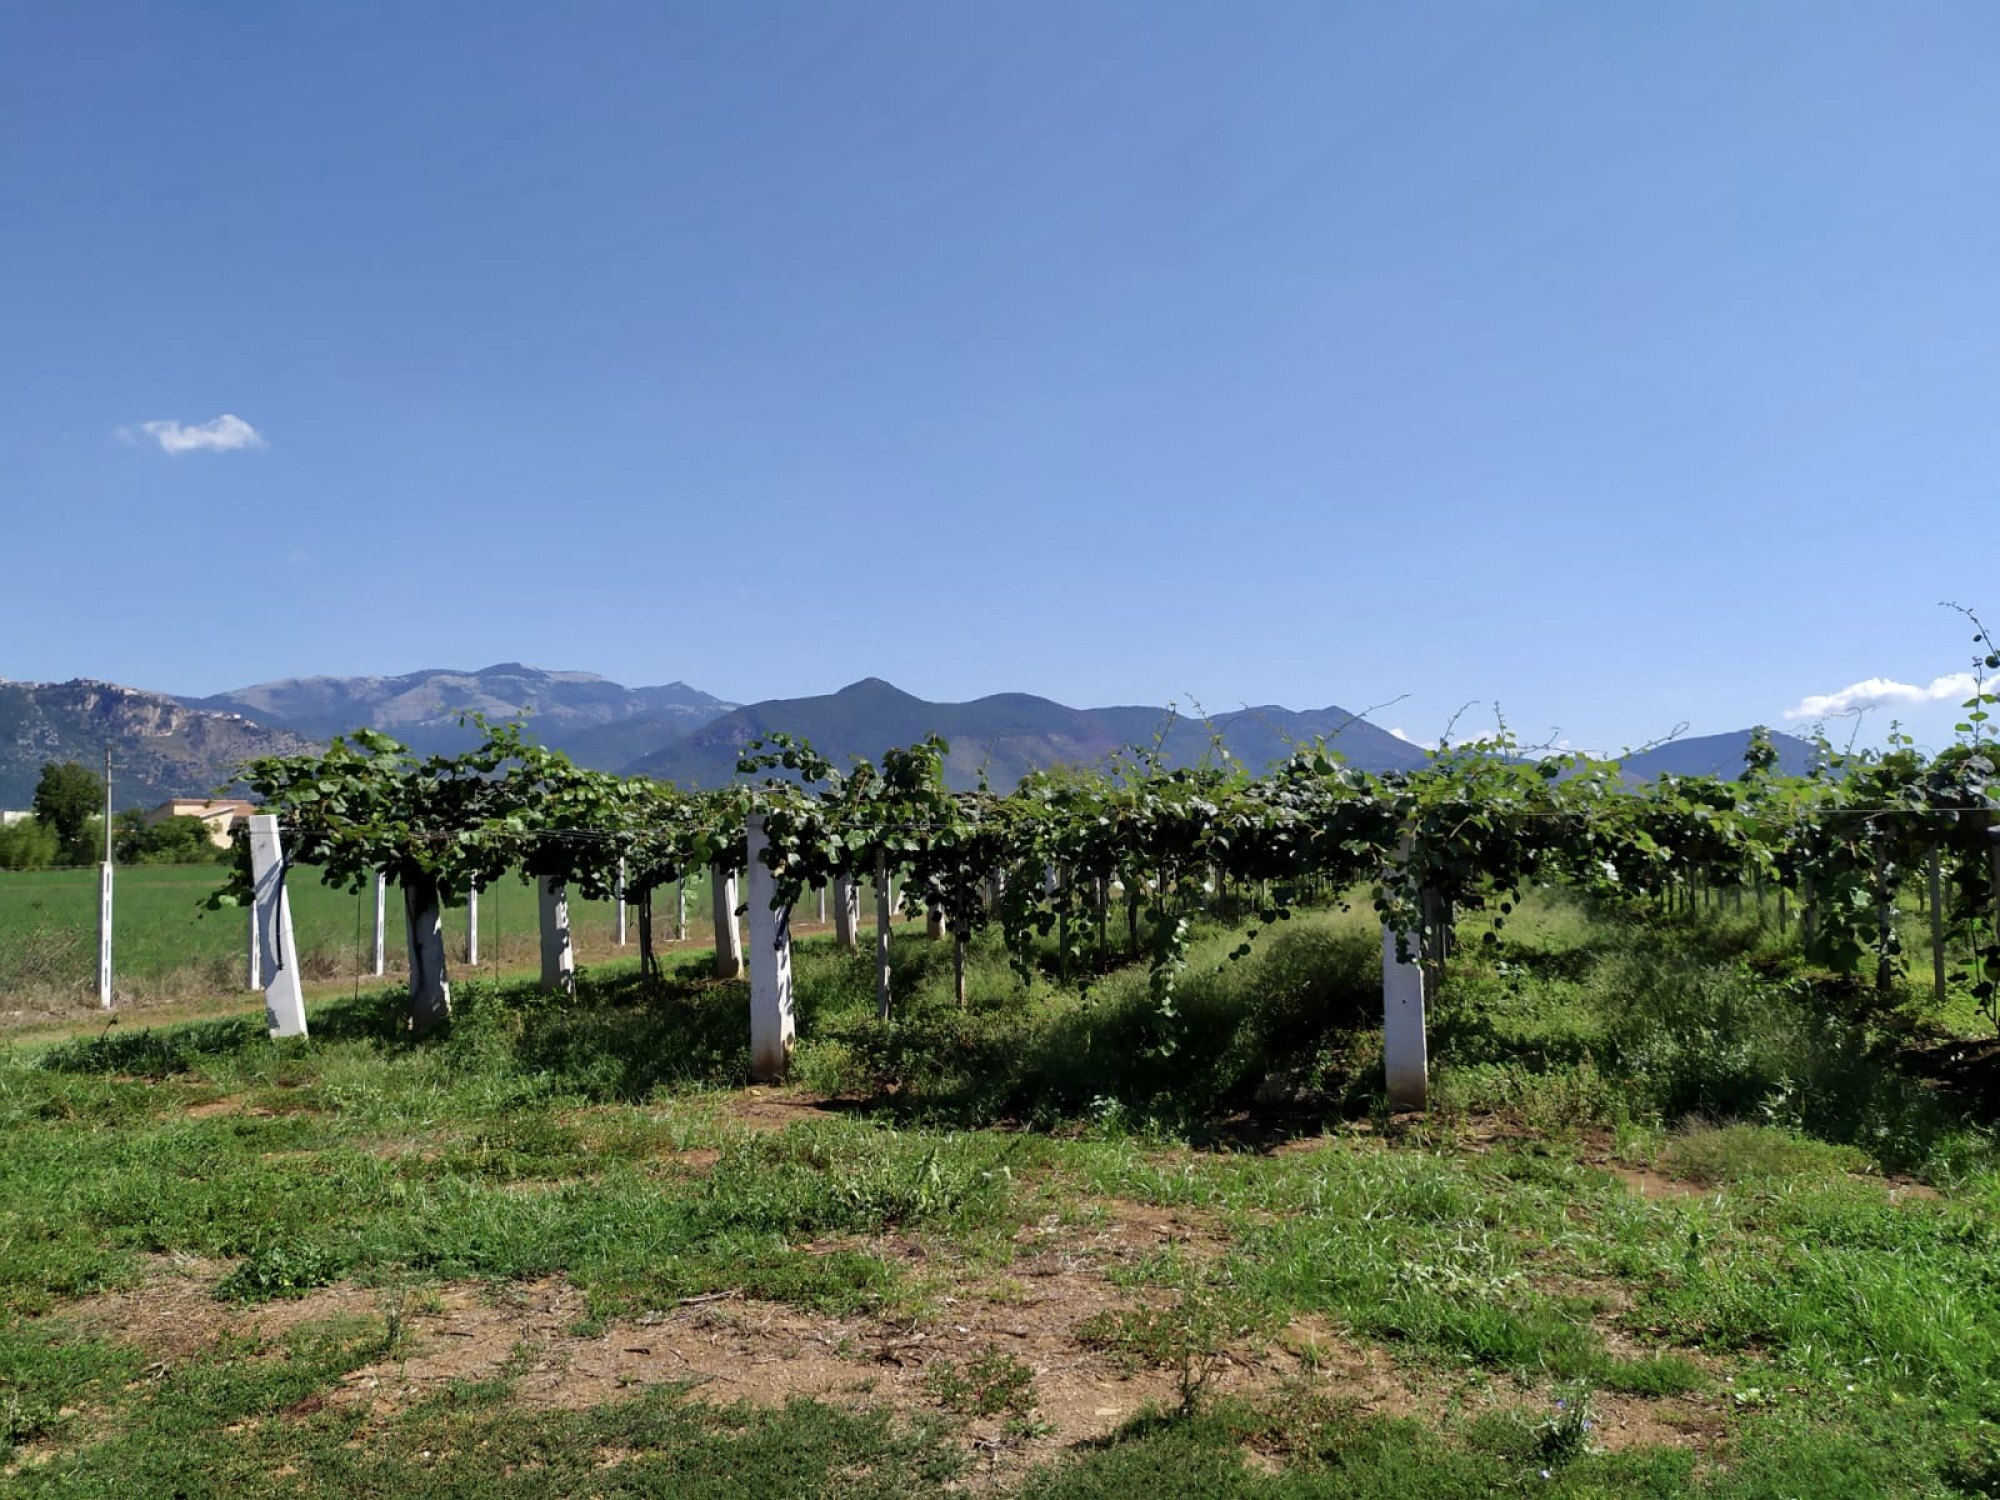 A kiwi plantation in the south of Rome. Photo: Silvia Marchetti